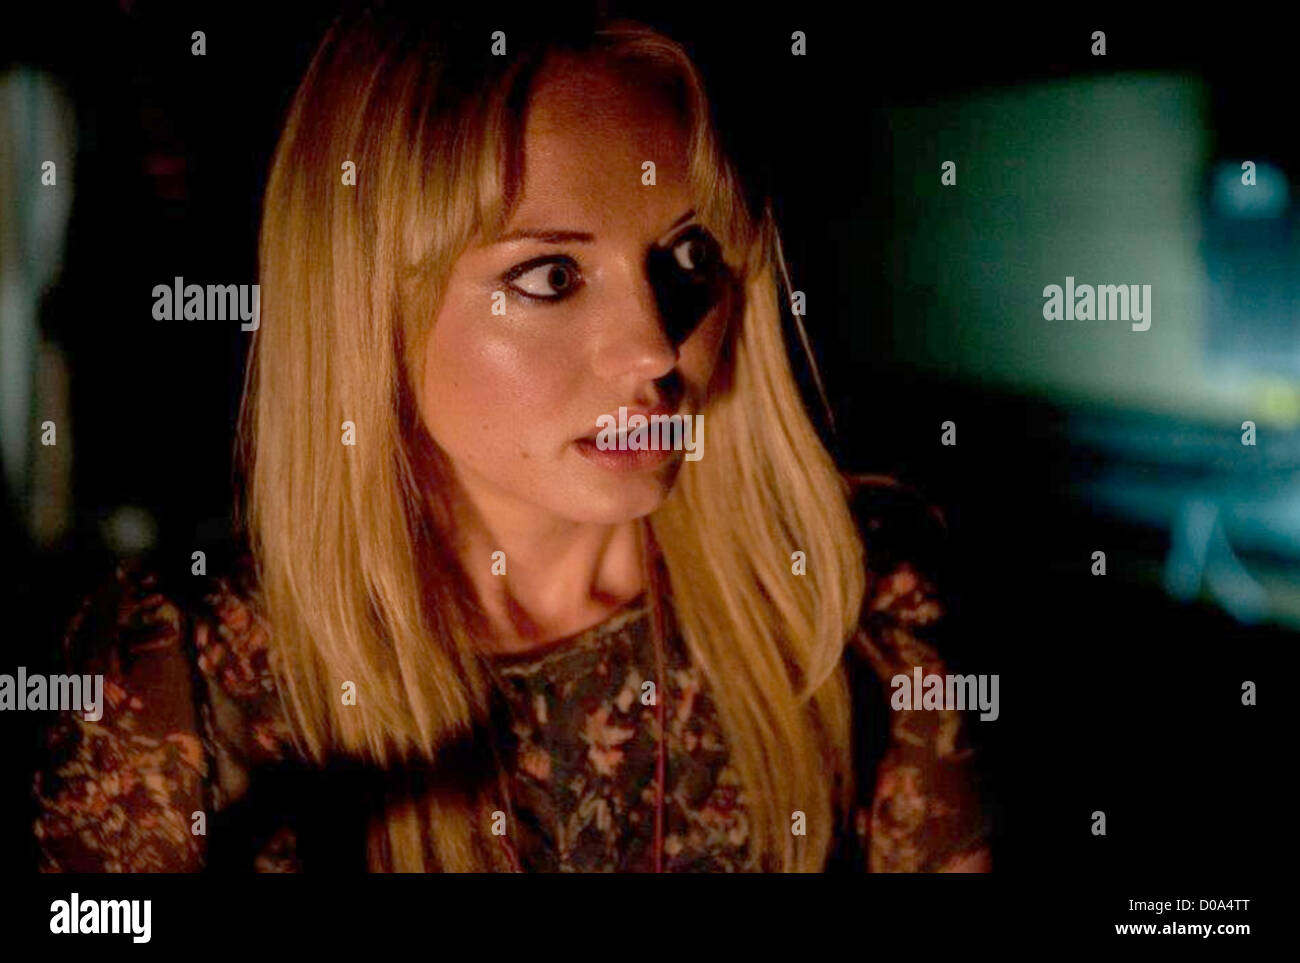 STORAGE 24  - 2013 Magnet Releasing's film with Laura Haddock as Nikki Stock Photo